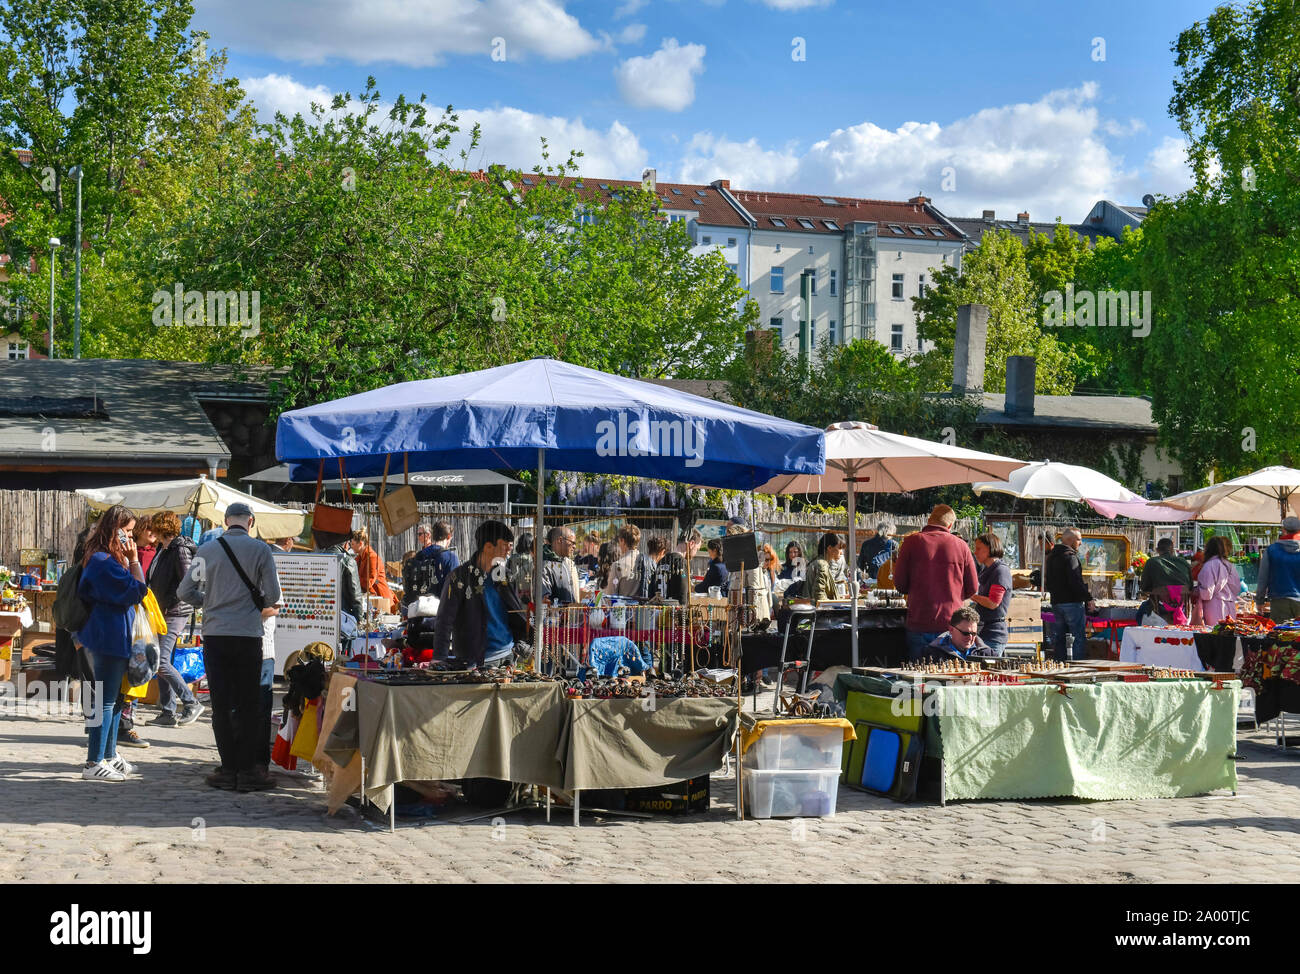 Flohmarkt am Mauerpark, Pankow, Prenzlauer Berg, Berlin, Deutschland Foto de stock